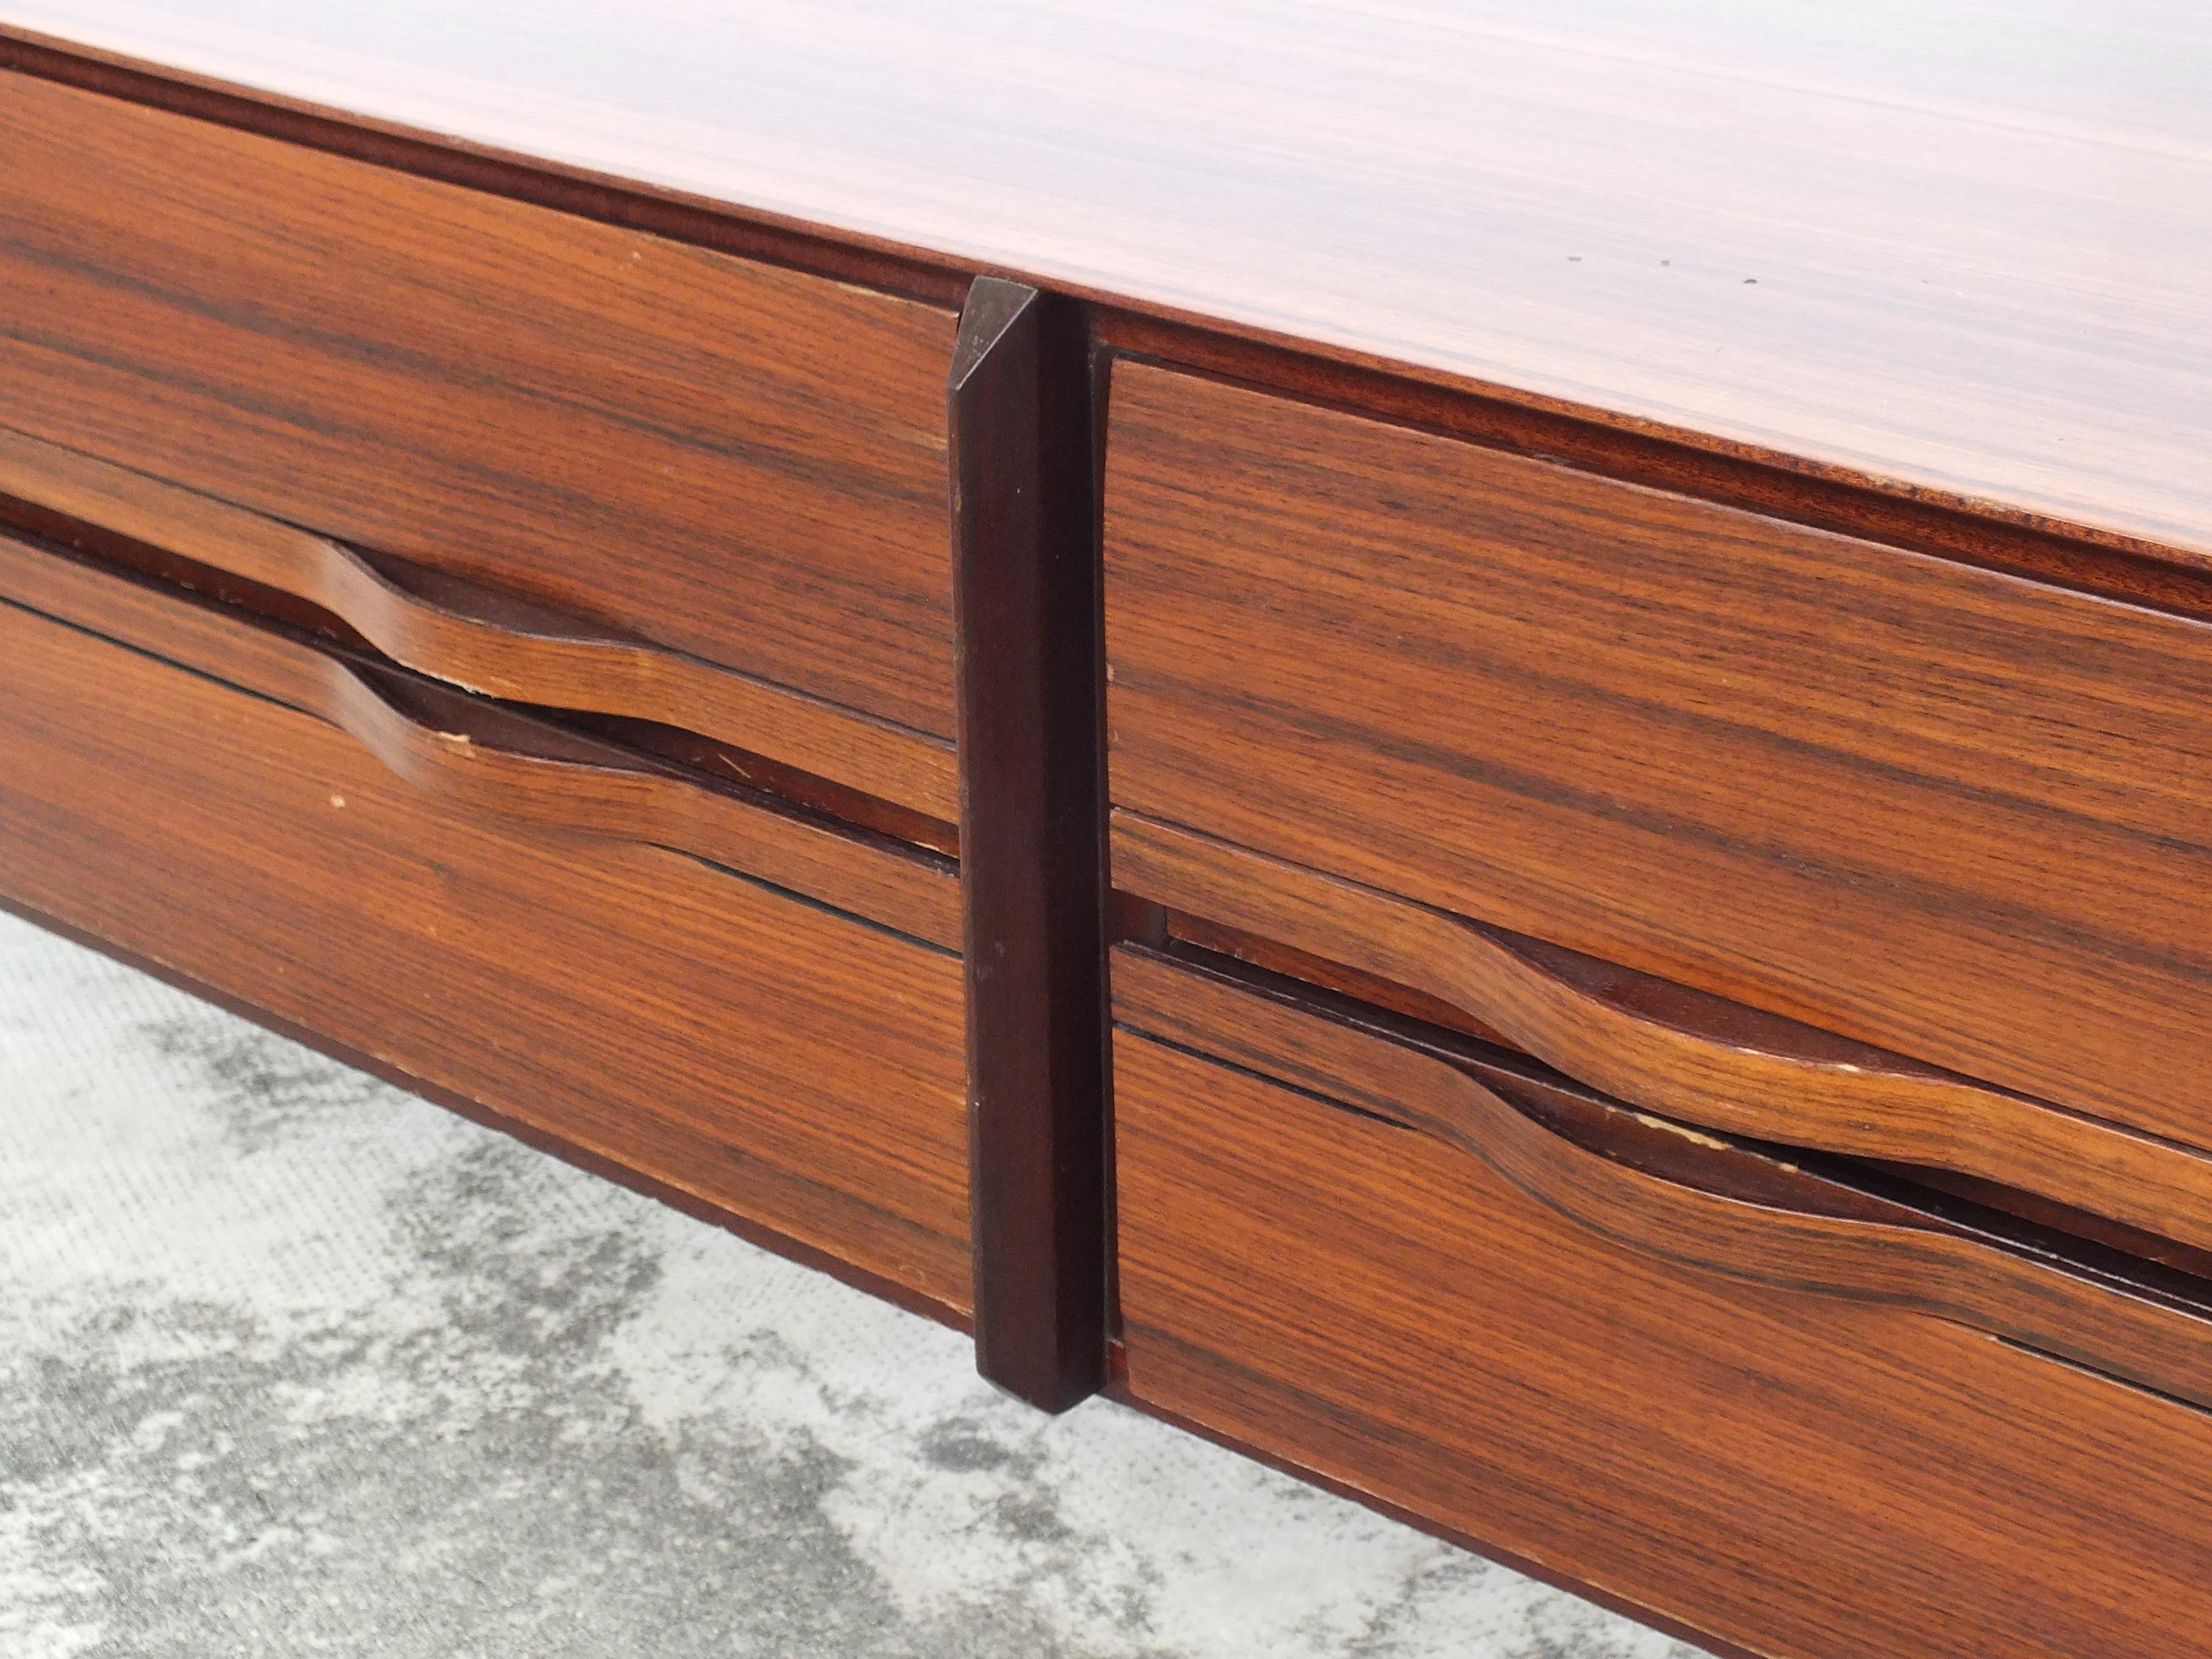 La Permanente meuble Cantu' Italy minimalist sideboard probable Frattini design  For Sale 6